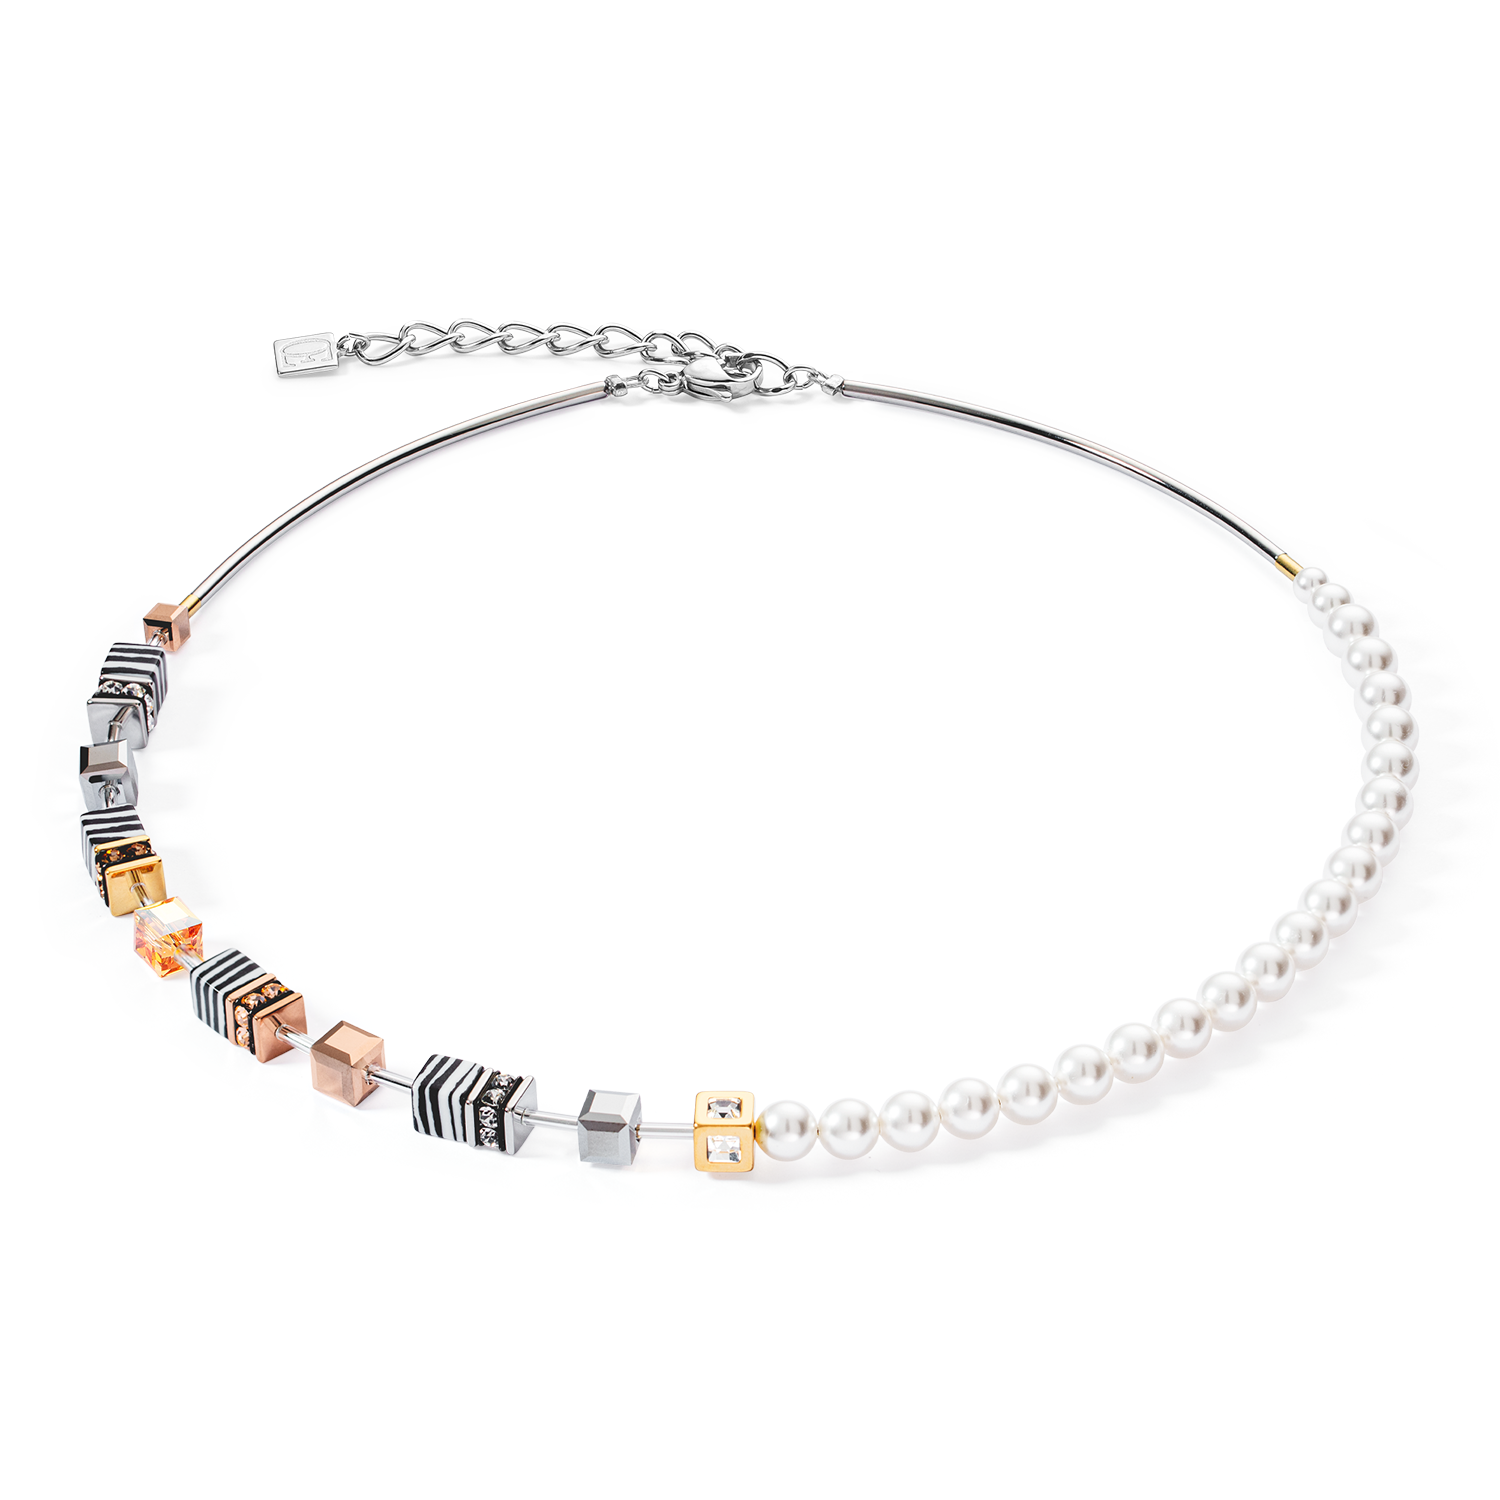 GeoCUBE® Fusion Festive necklace tricolour